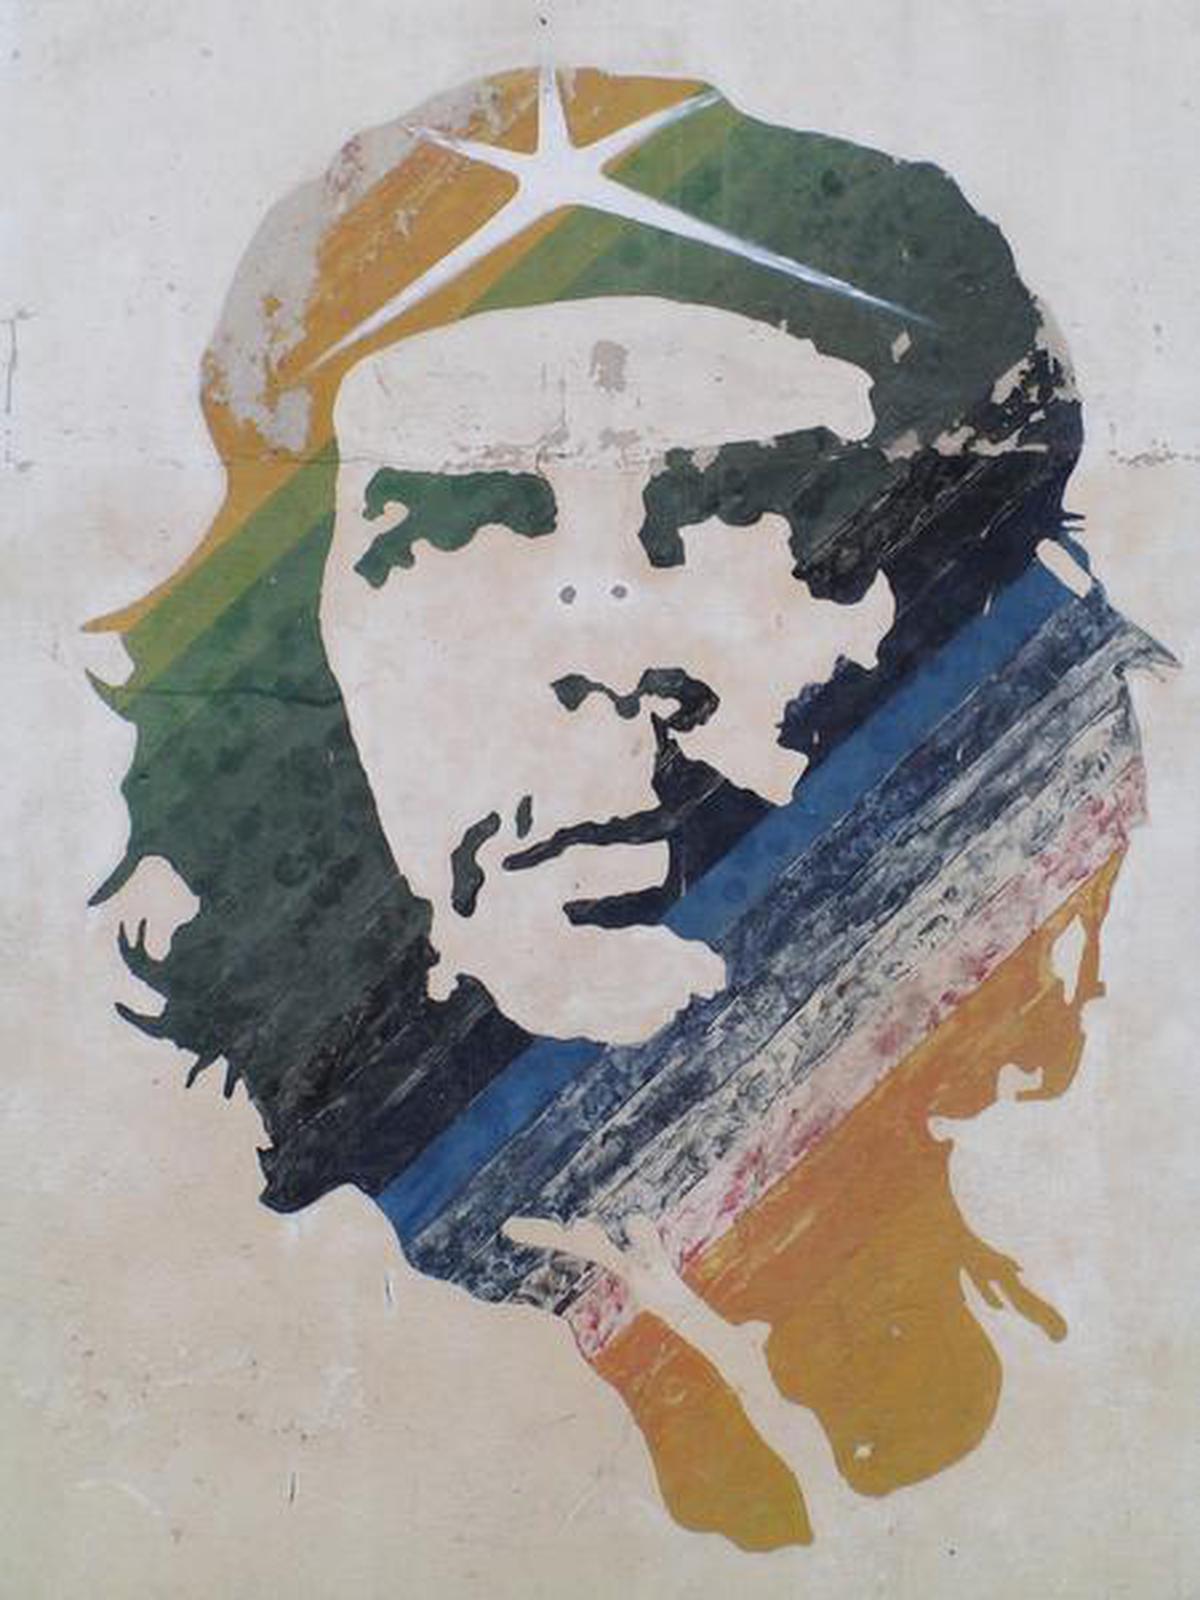 Teran Salazar, Bolivian Soldier Who Shot Dead Che Guevara, Passes